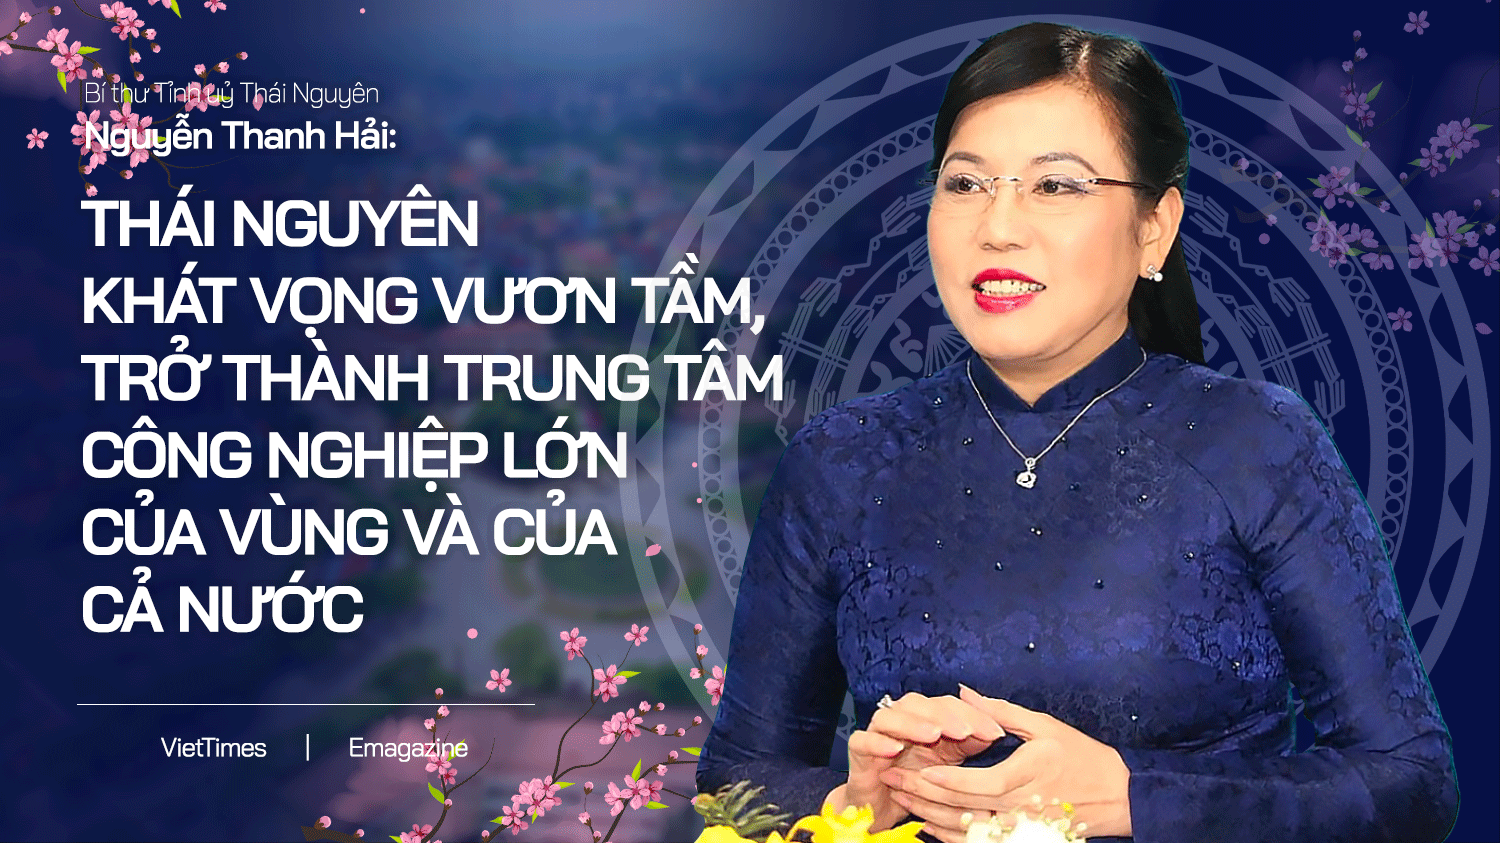 Ms. Nguyễn Thanh Hải